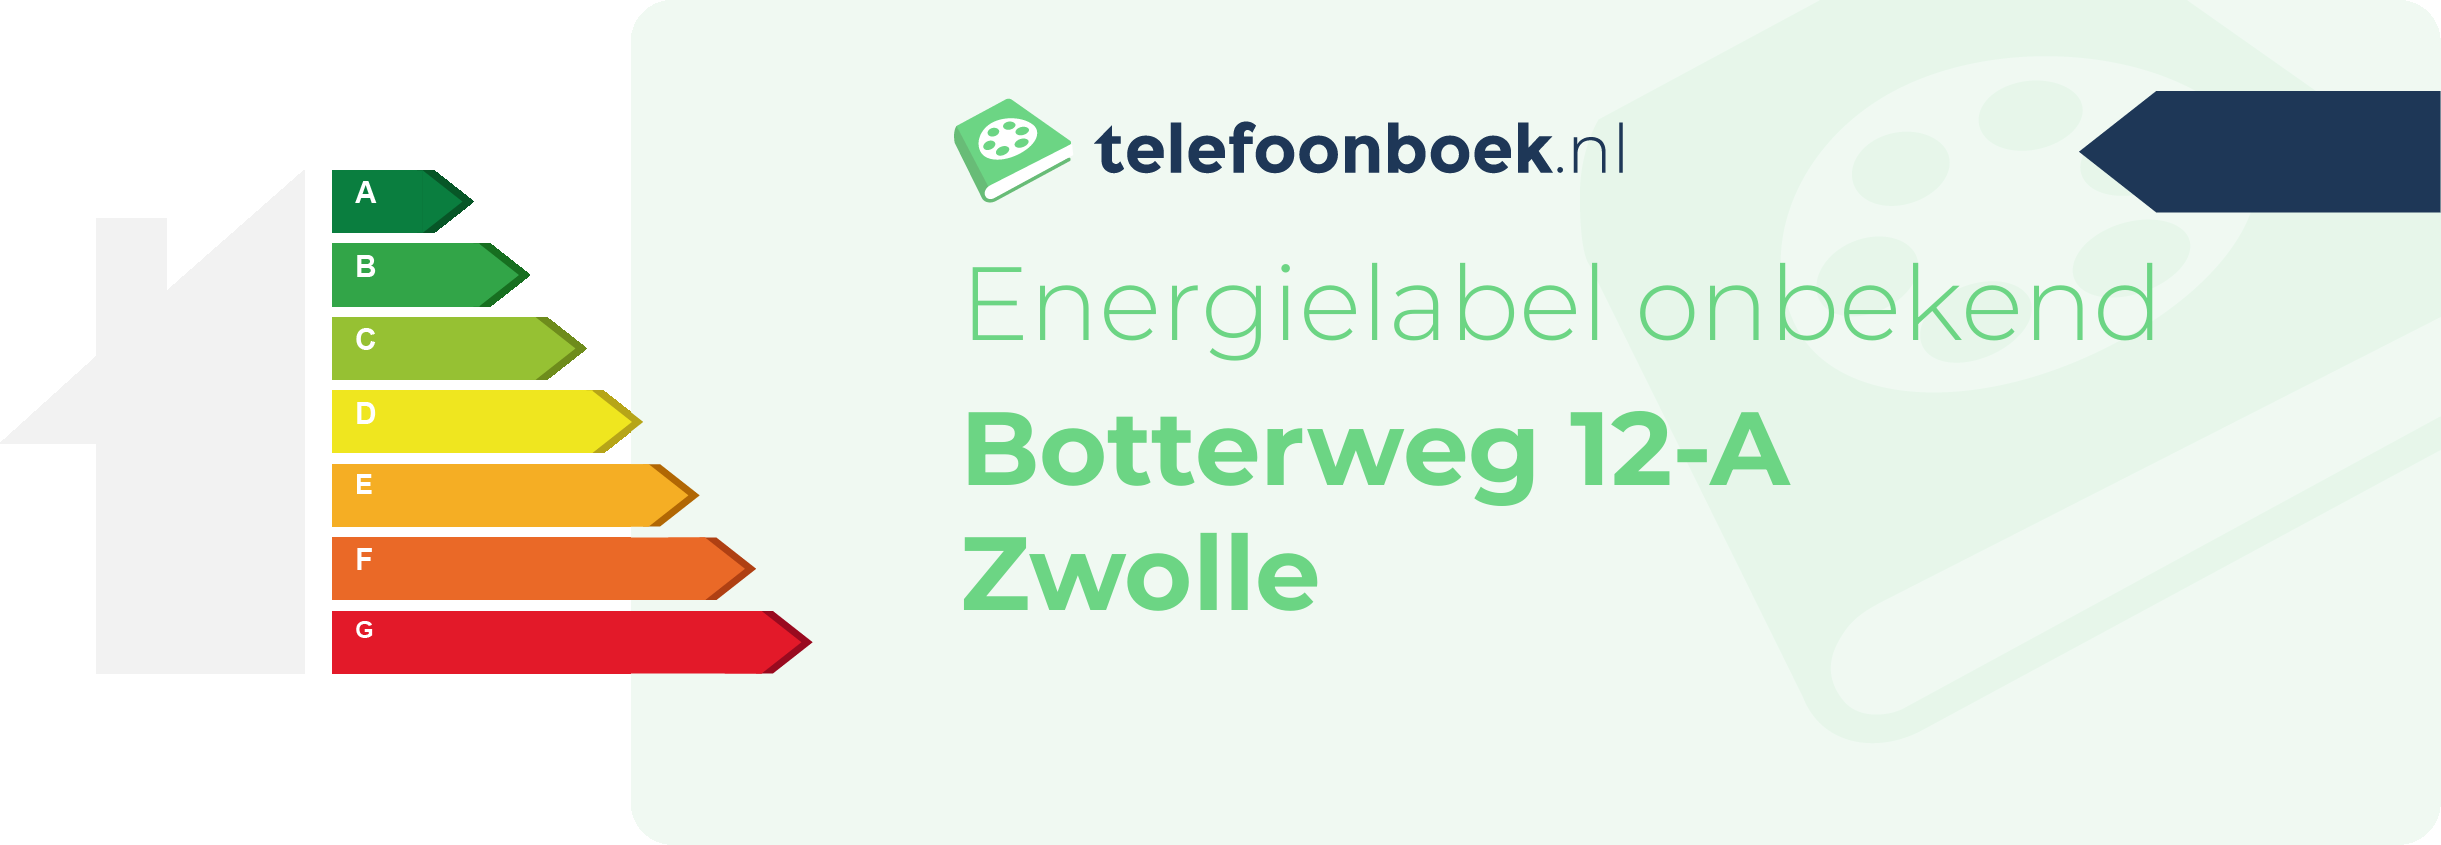 Energielabel Botterweg 12-A Zwolle